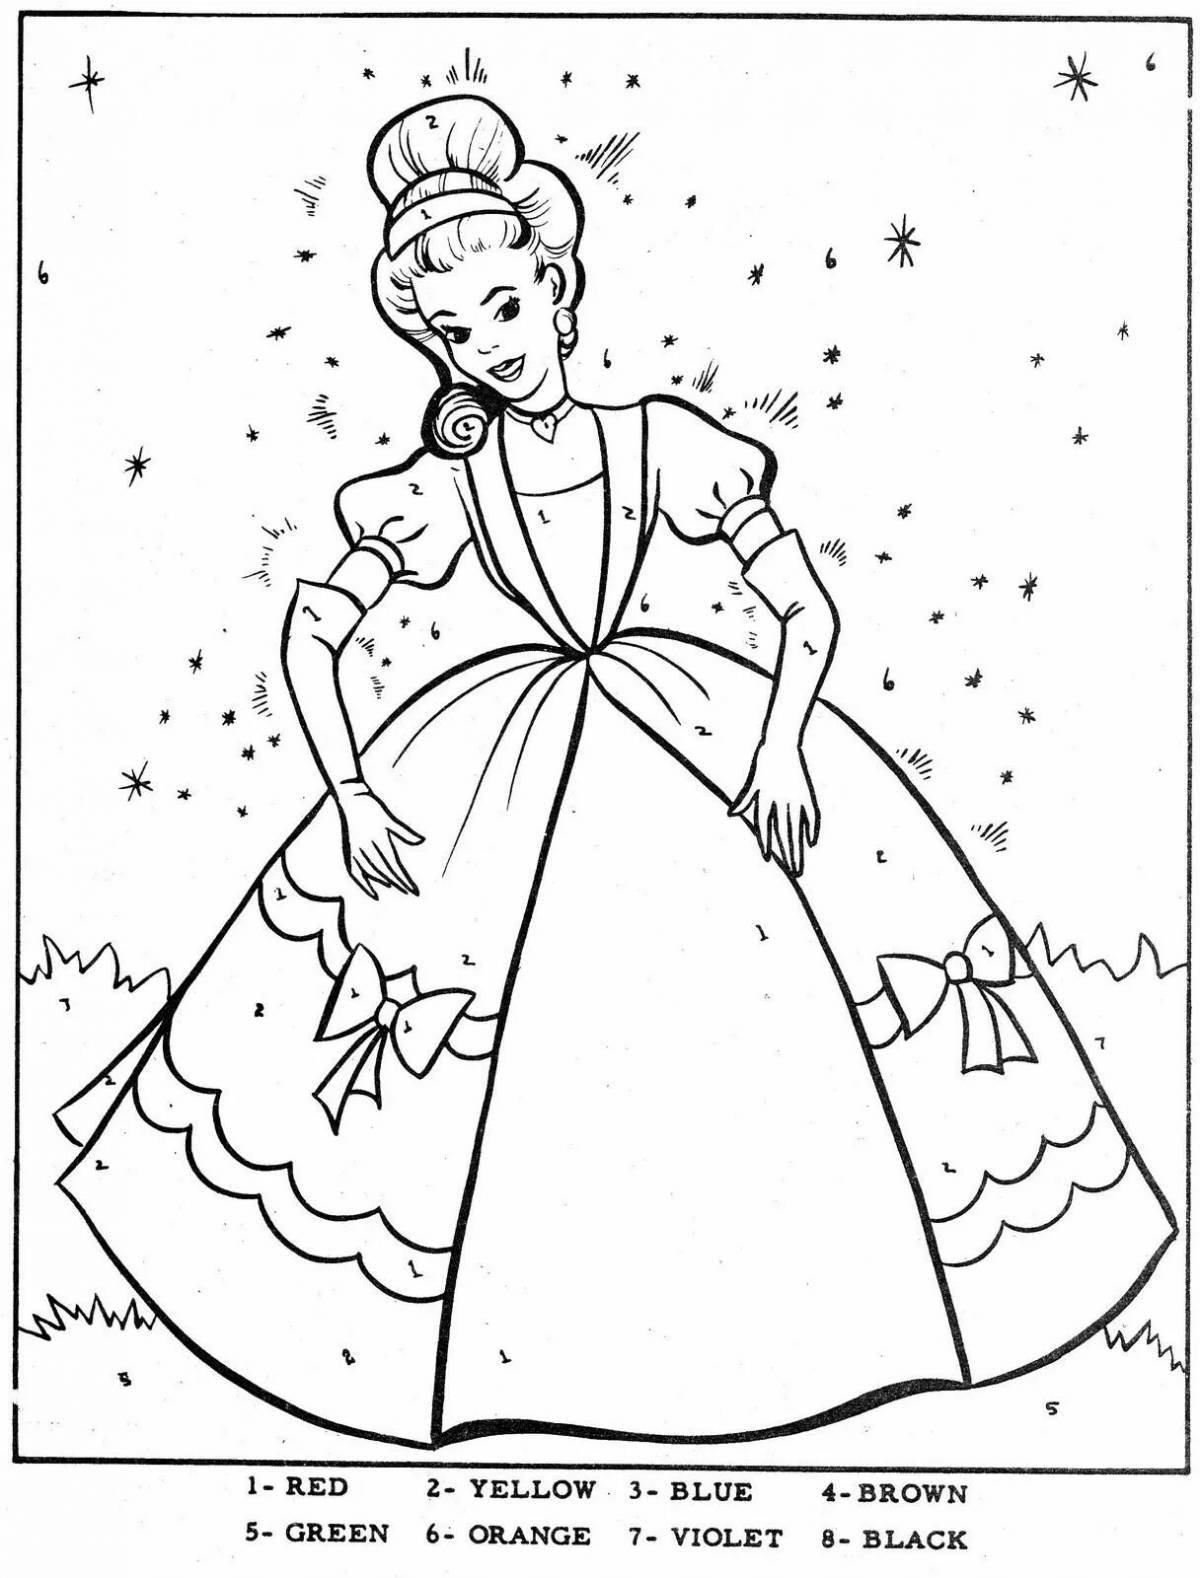 Charming princess coloring page